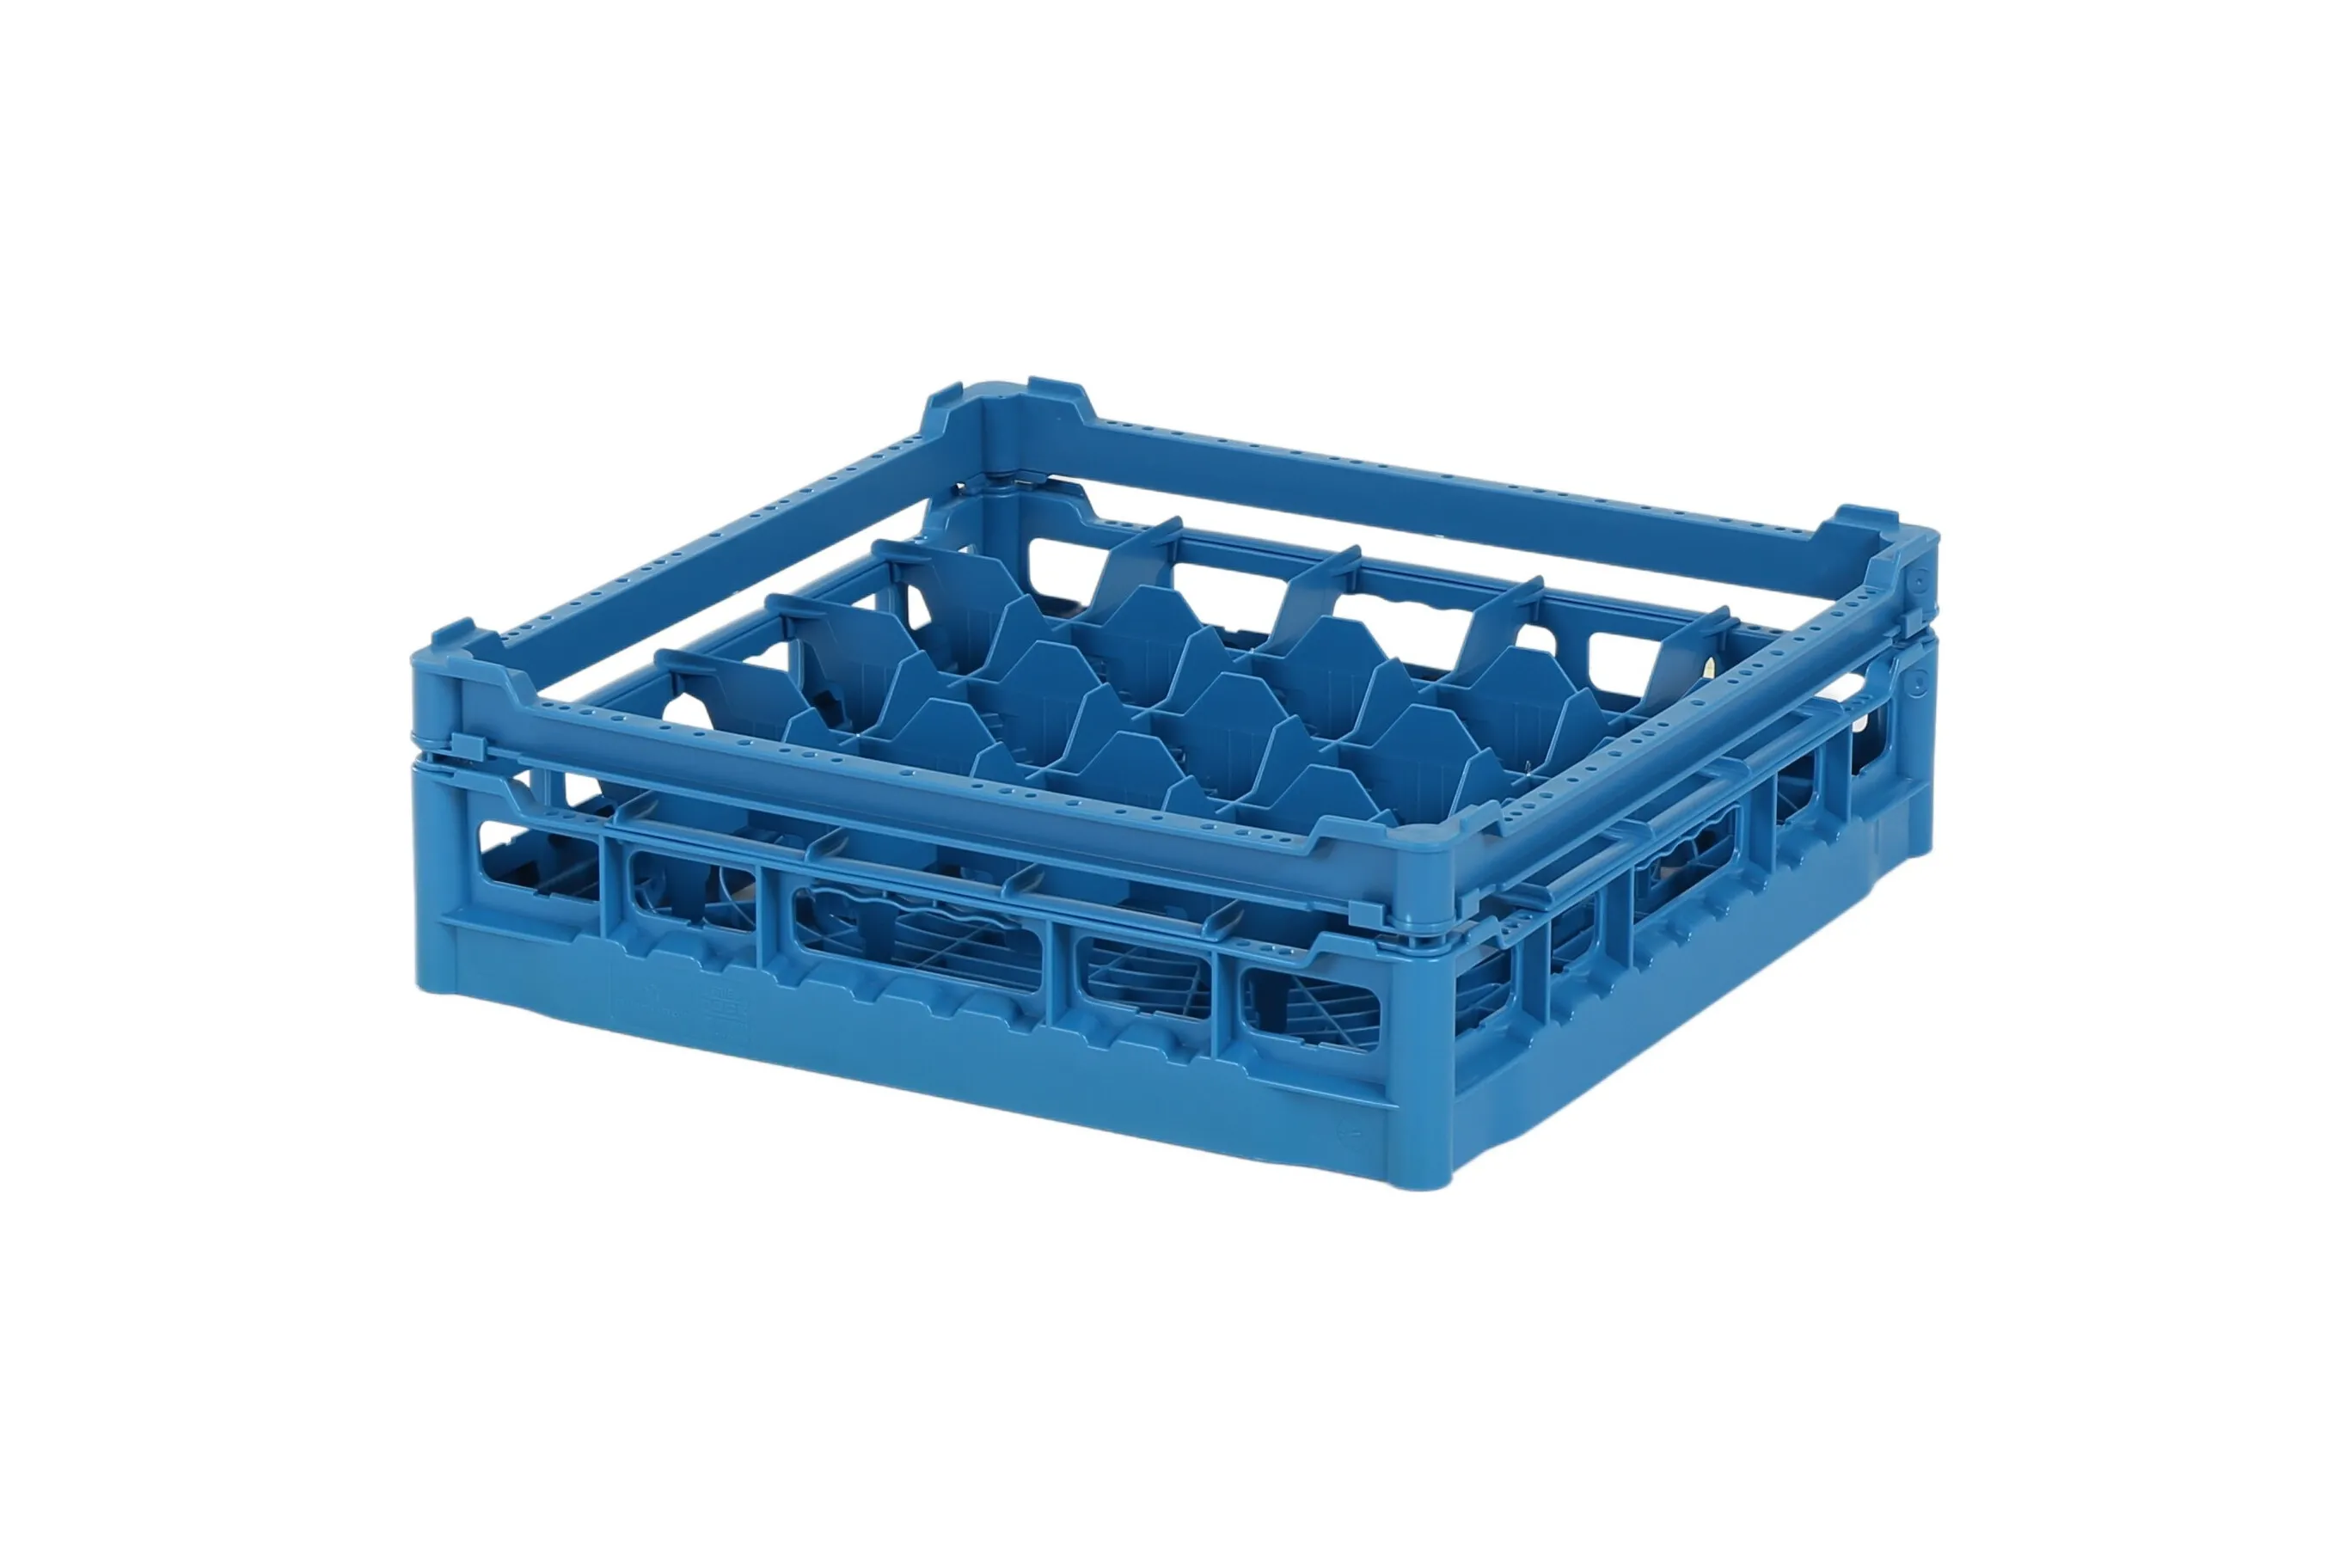 Glass basket 500x500mm blue - maximum glass height 110 mm - with blue 5x5 compartmentalization - maximum glass Ø 90mm